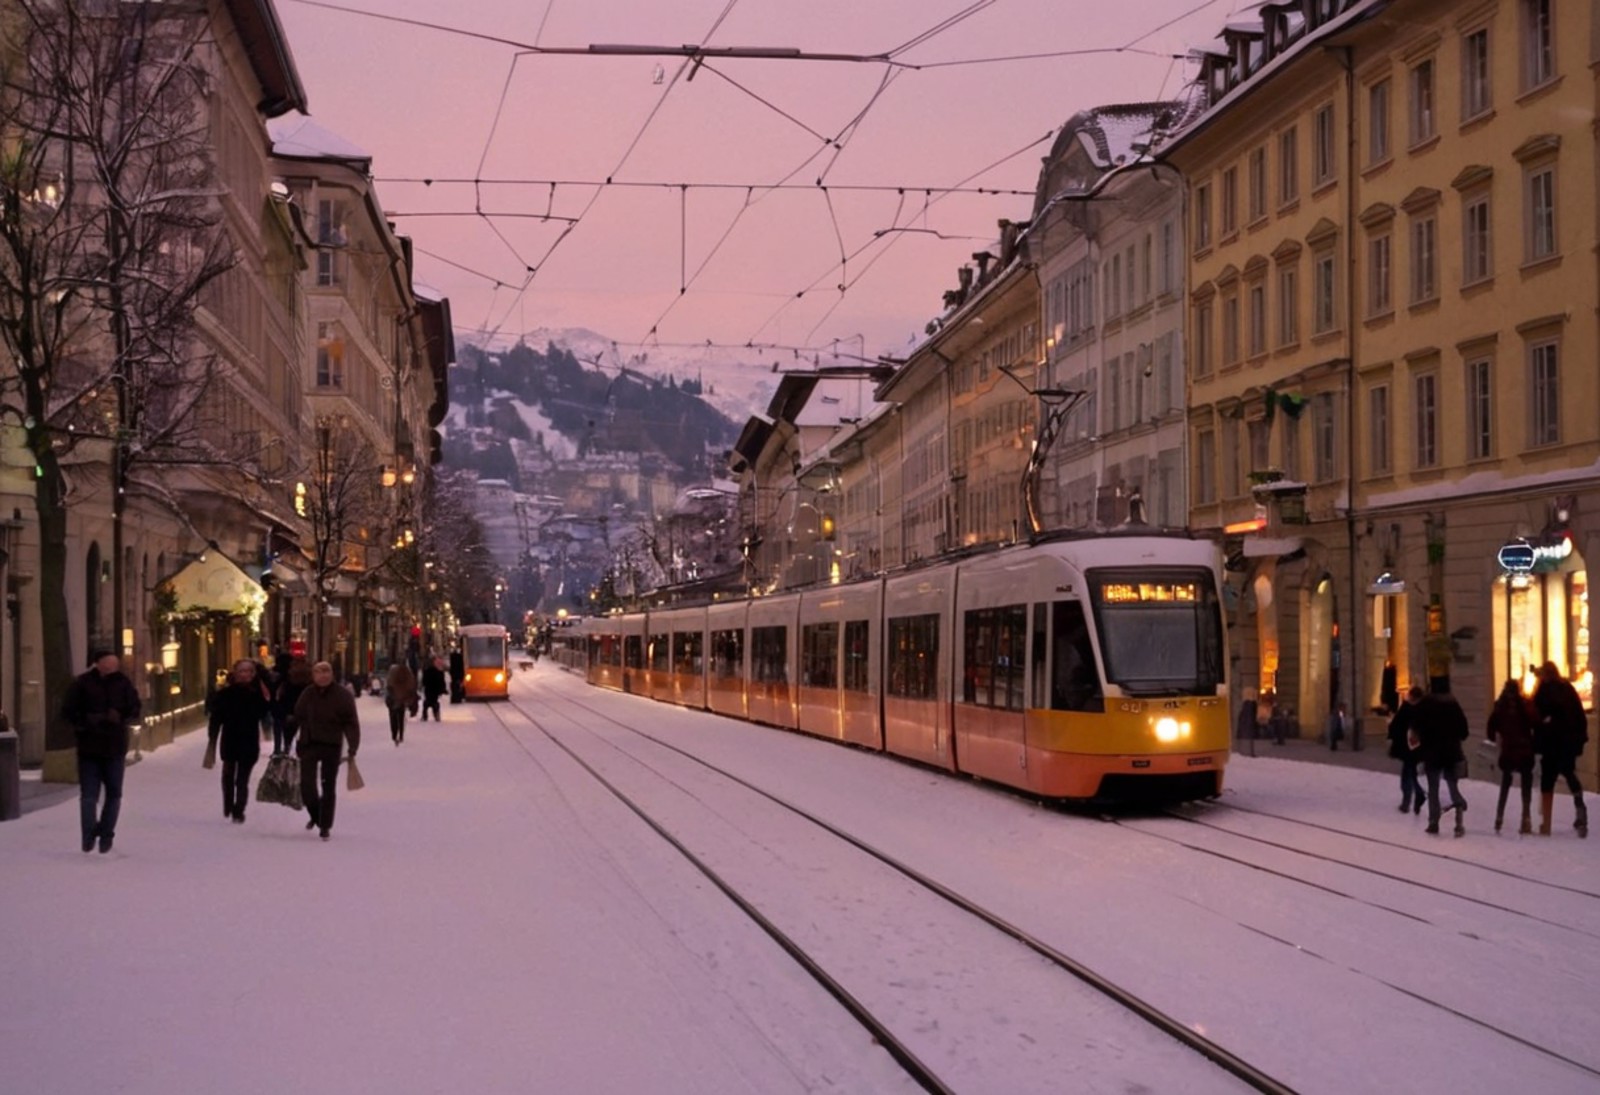 00005-3209918768-Bern downtown in winter, snowy, christmas, dusk, people, modern tram, analo style, restaurants, wide shot, shops, natural lighti.png